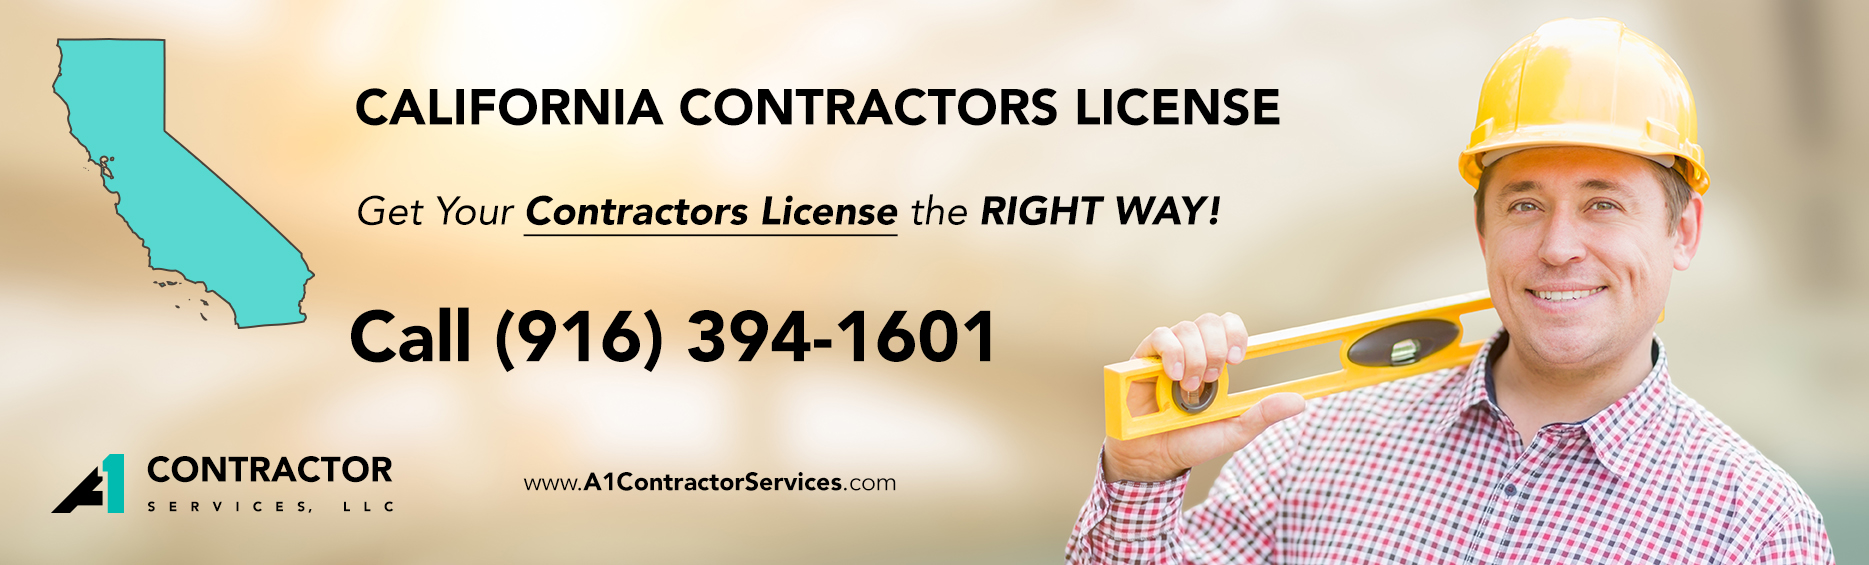 California Contractor License - A1 Contractor Services, LLC - (916) 394-1601